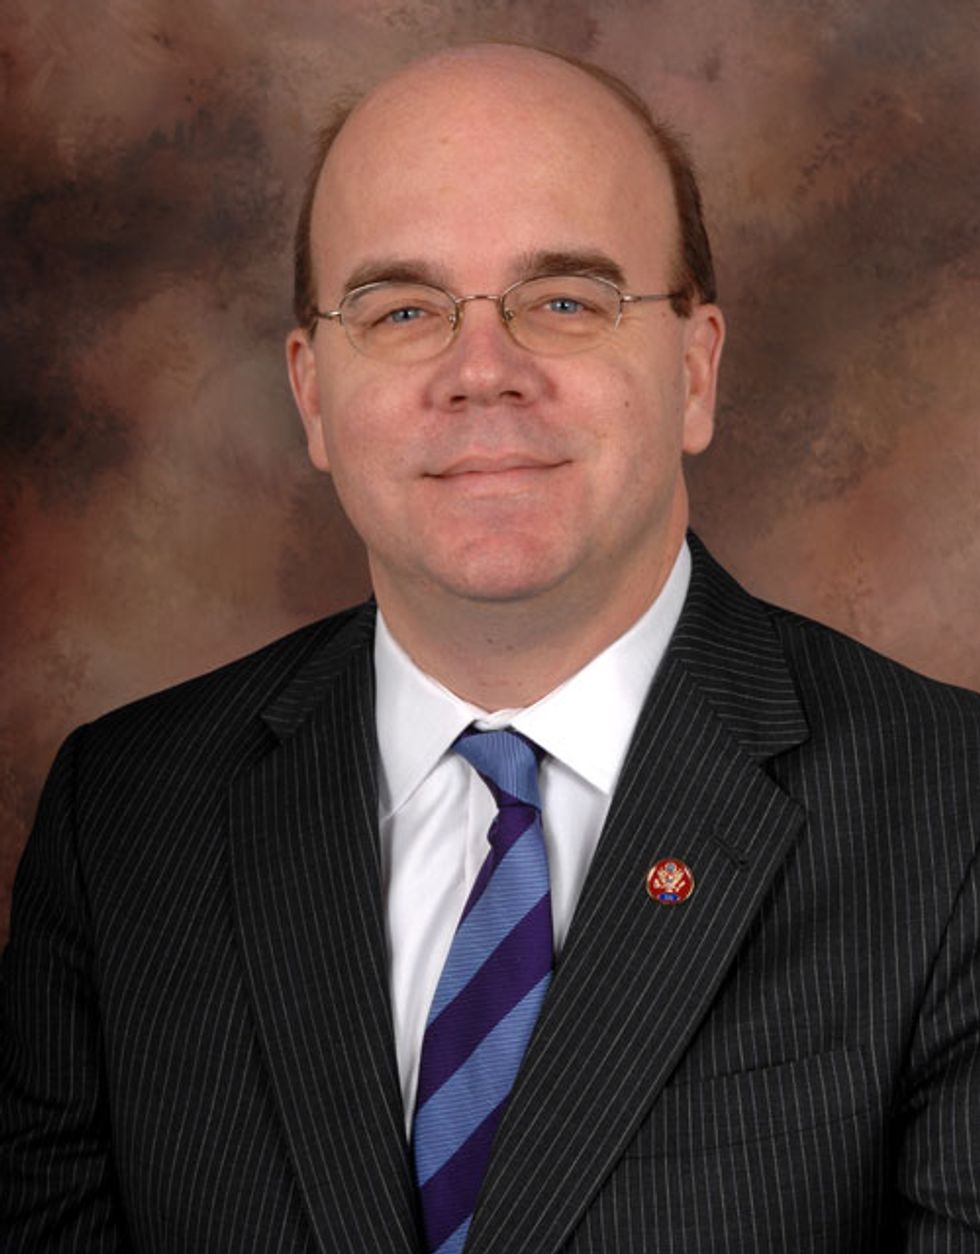 Legislative Badass: Rep. Jim McGovern Stands Up For Poor, Hungry; GOP Says STFU